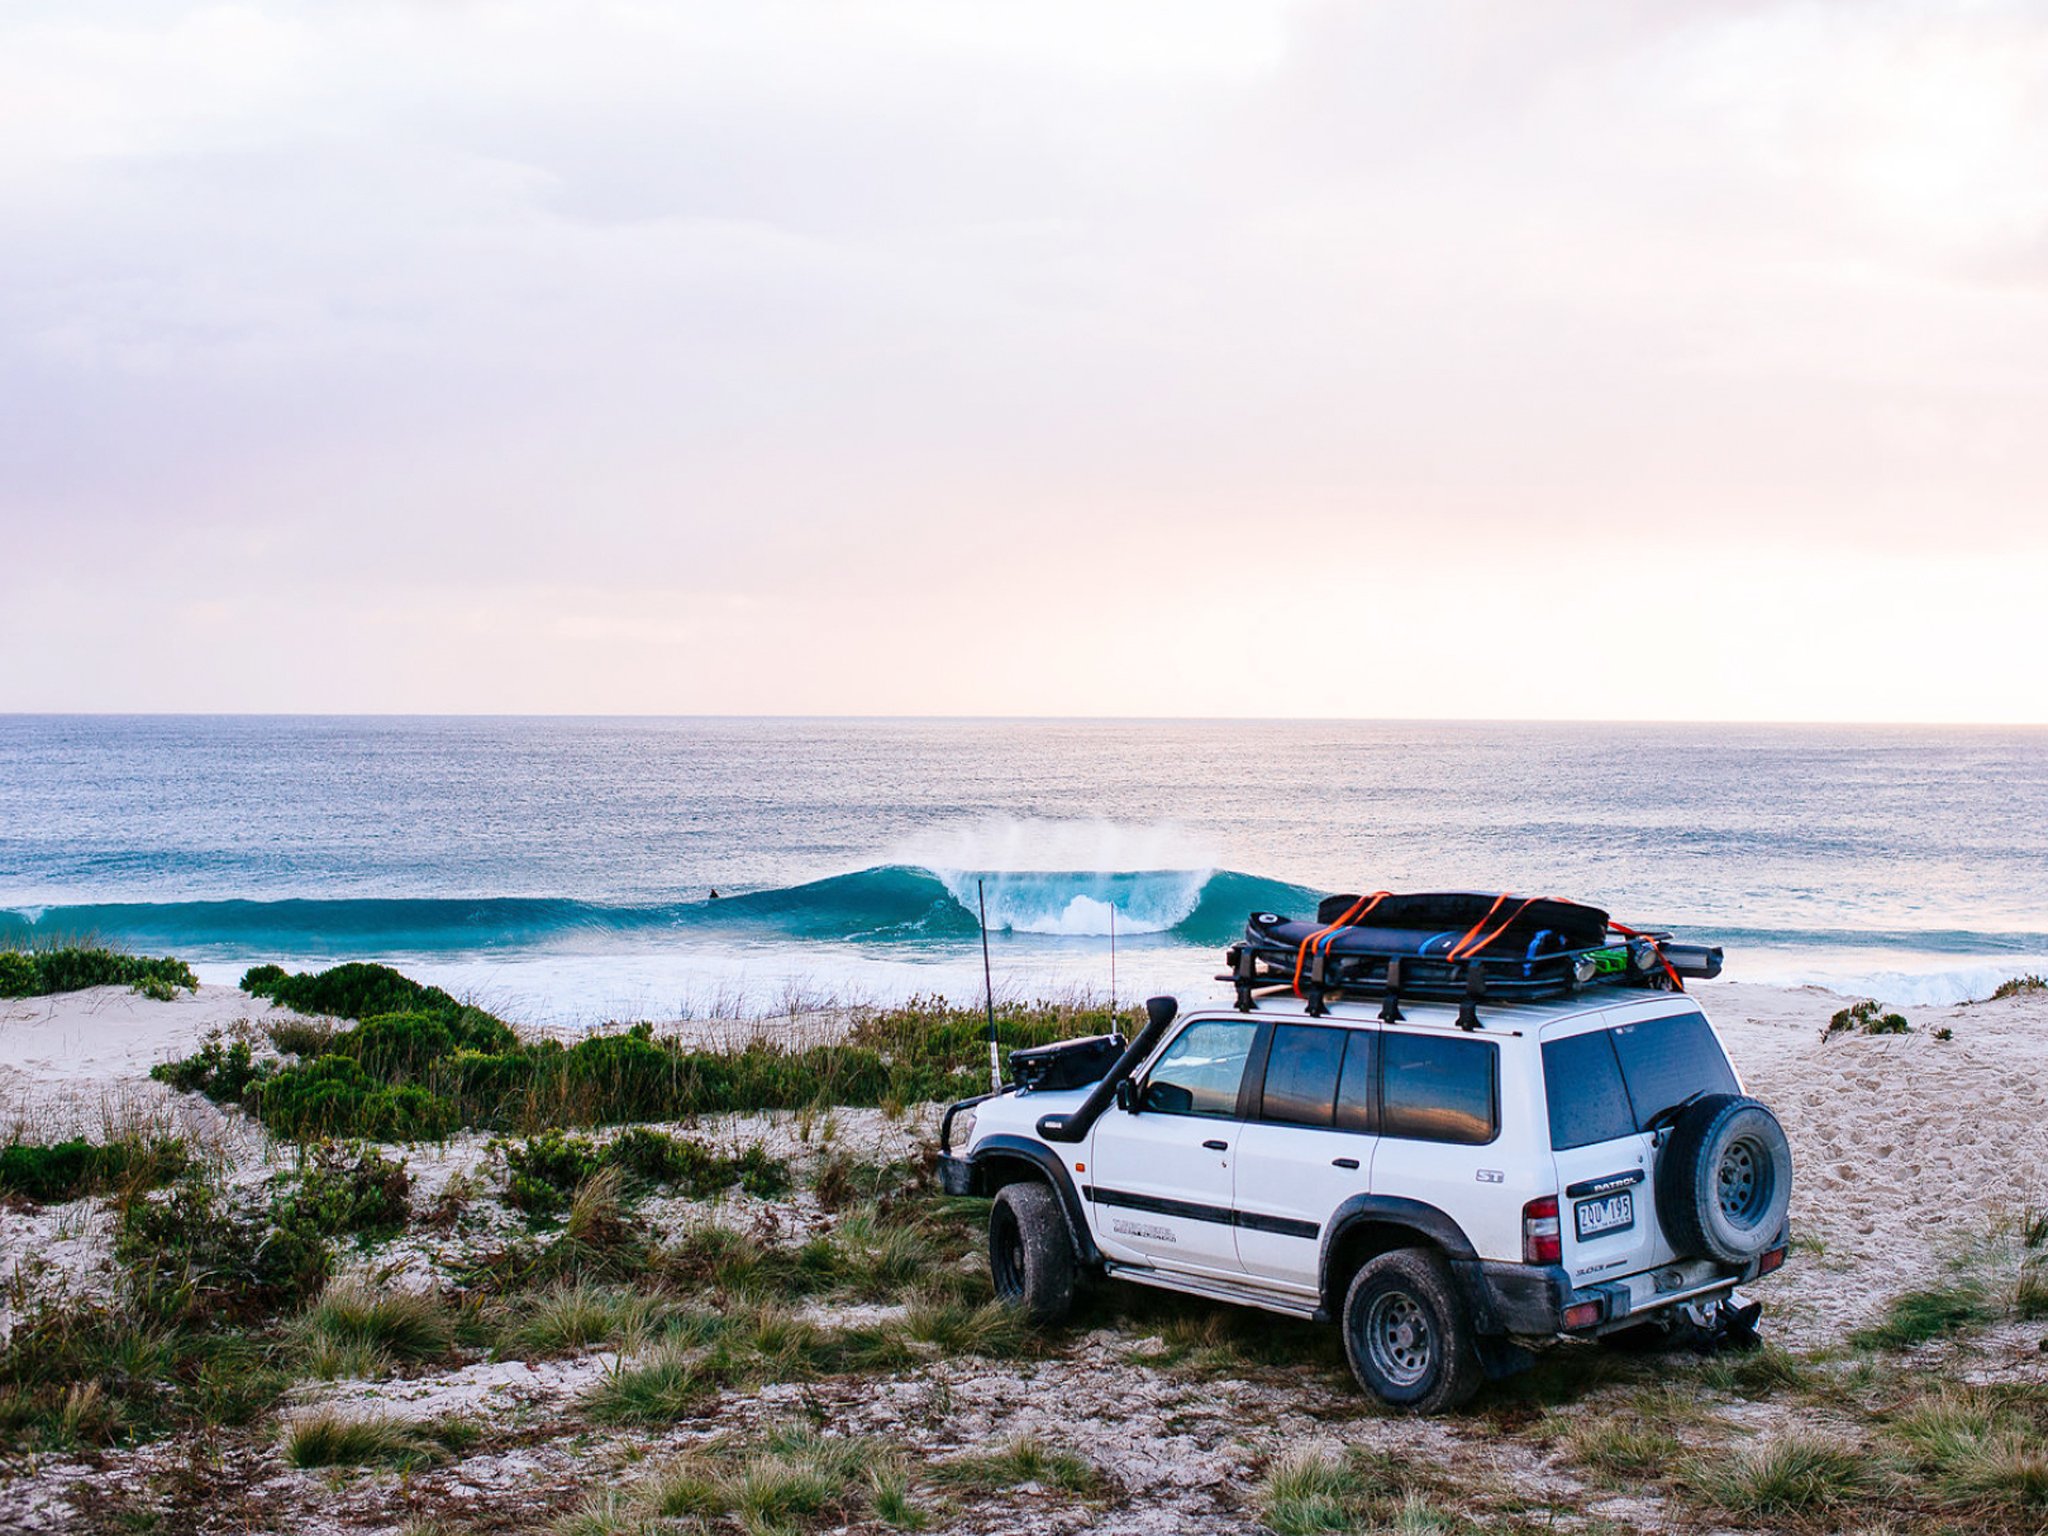 King-island-tasmania-surf-4WD.jpg